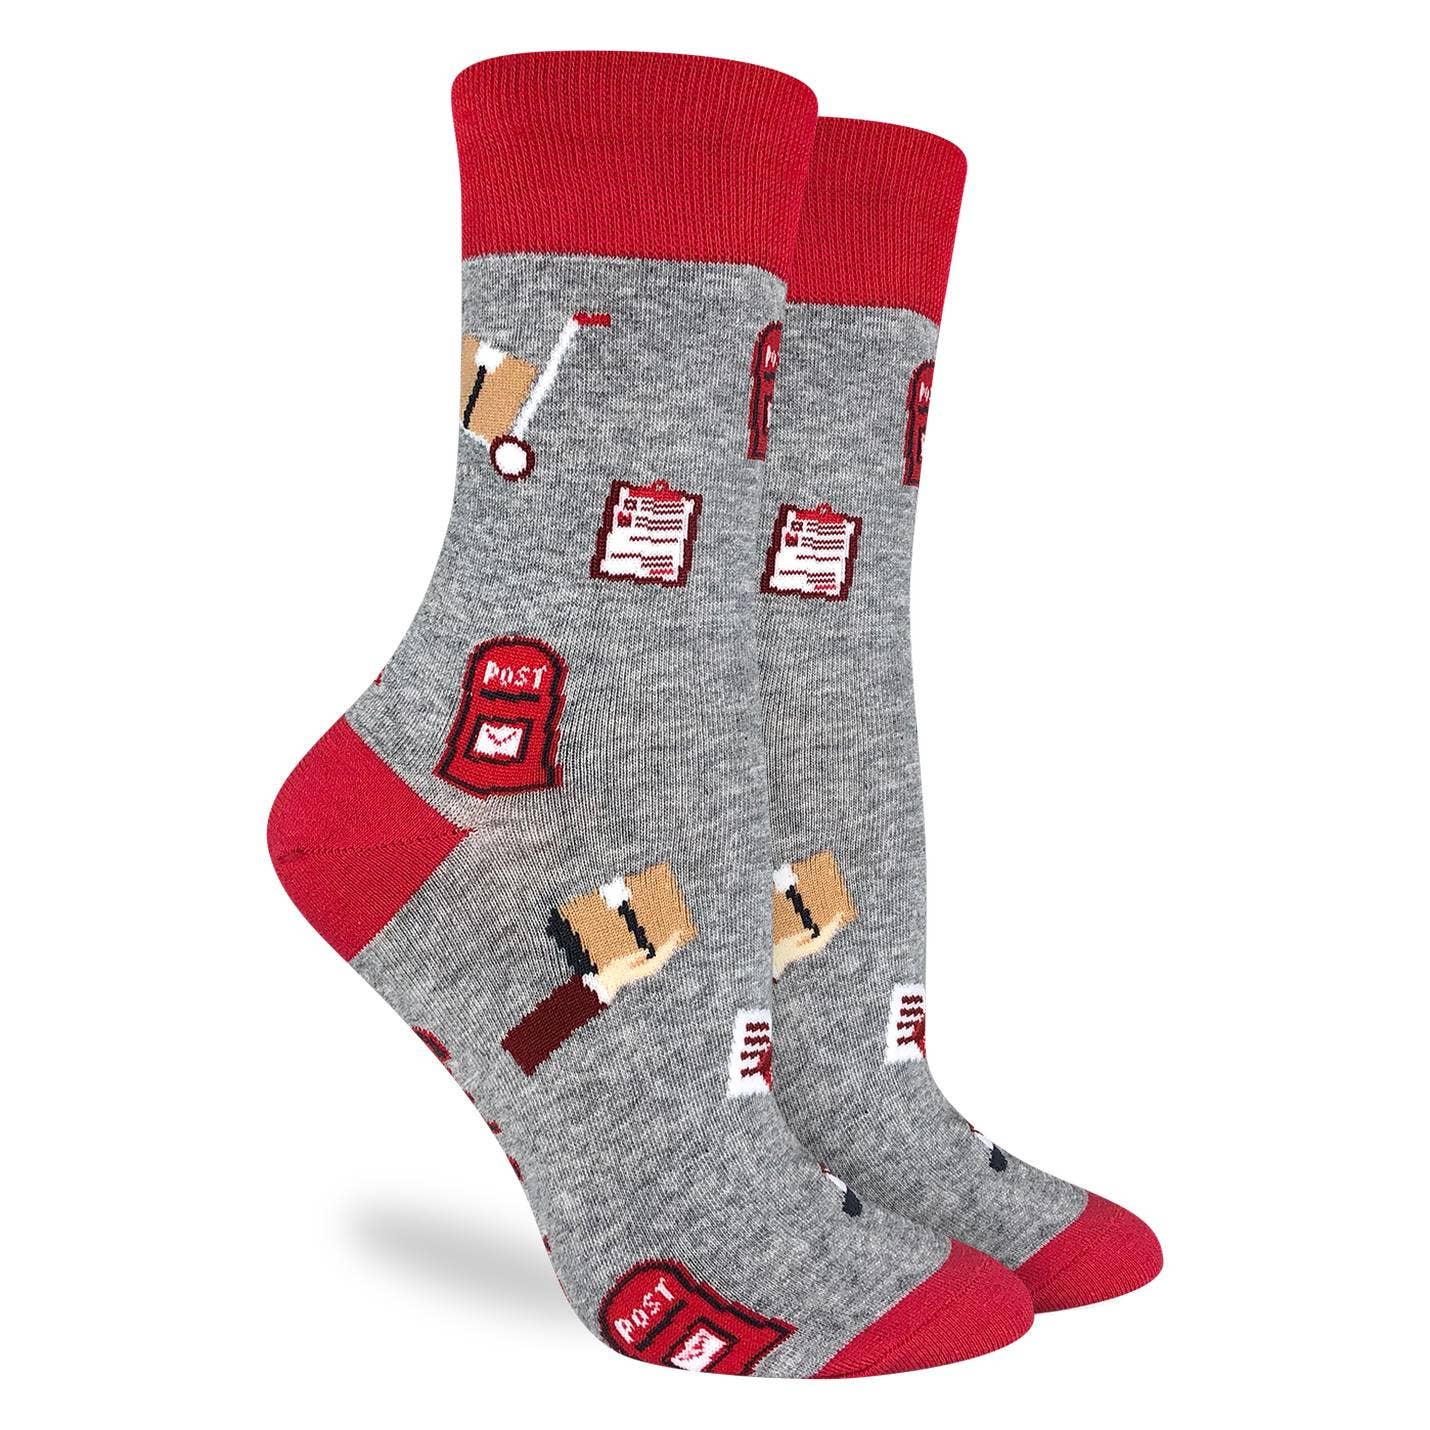 Postal Worker Socks